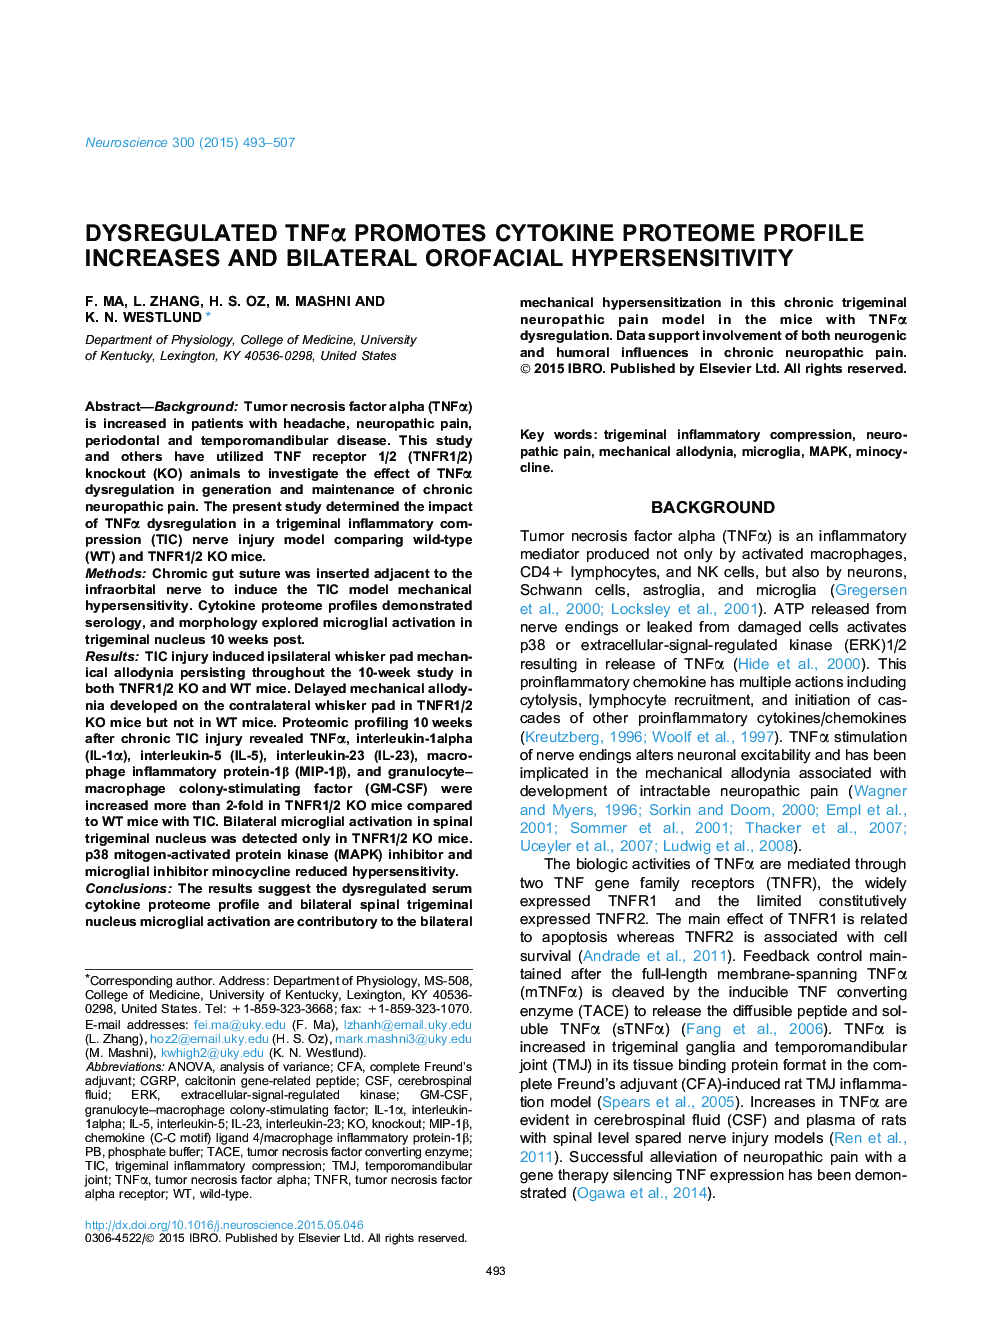 Dysregulated TNFÎ± promotes cytokine proteome profile increases and bilateral orofacial hypersensitivity